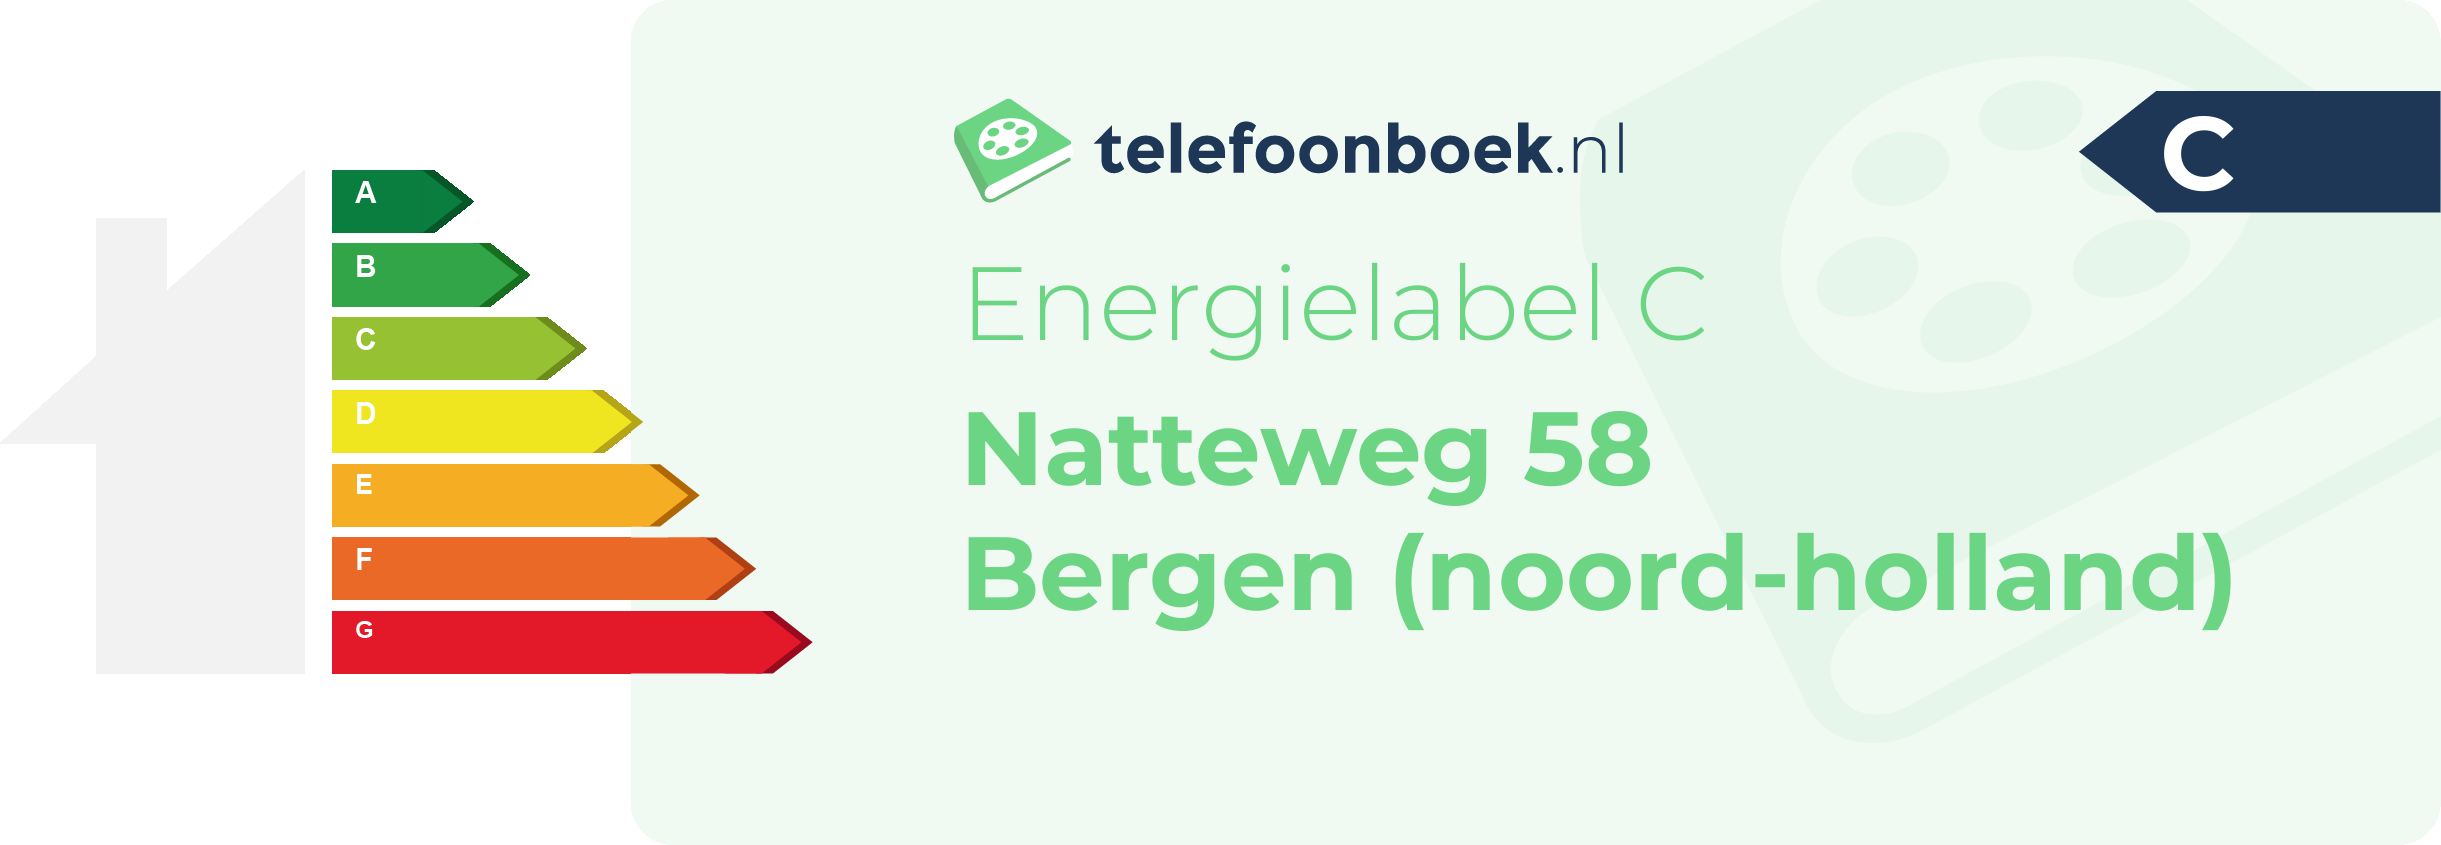 Energielabel Natteweg 58 Bergen (Noord-Holland)